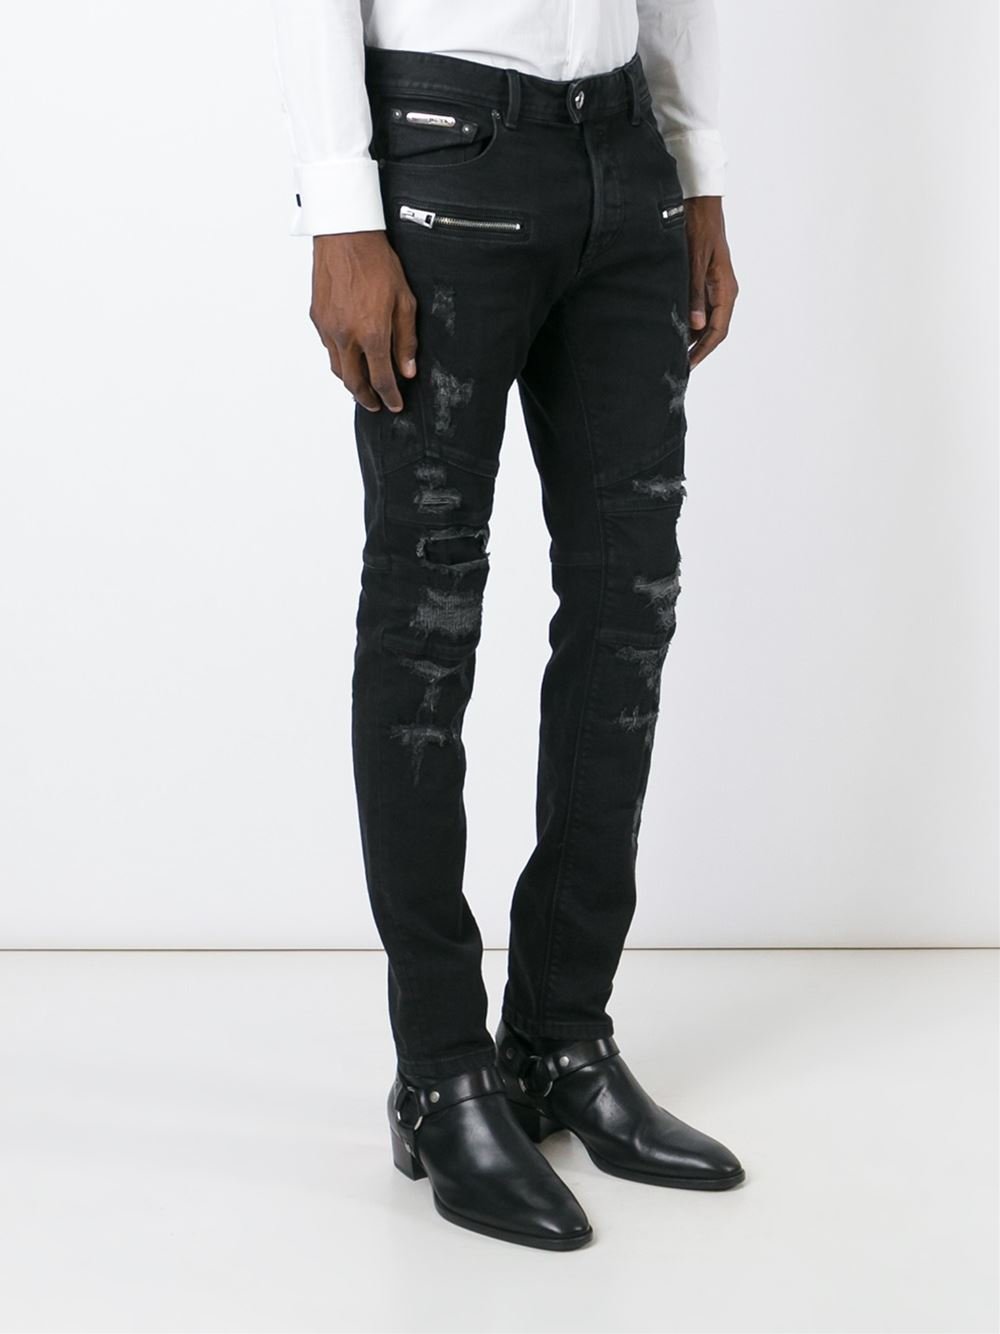 Just Cavalli Distressed Zip Jeans in Black for Men - Lyst